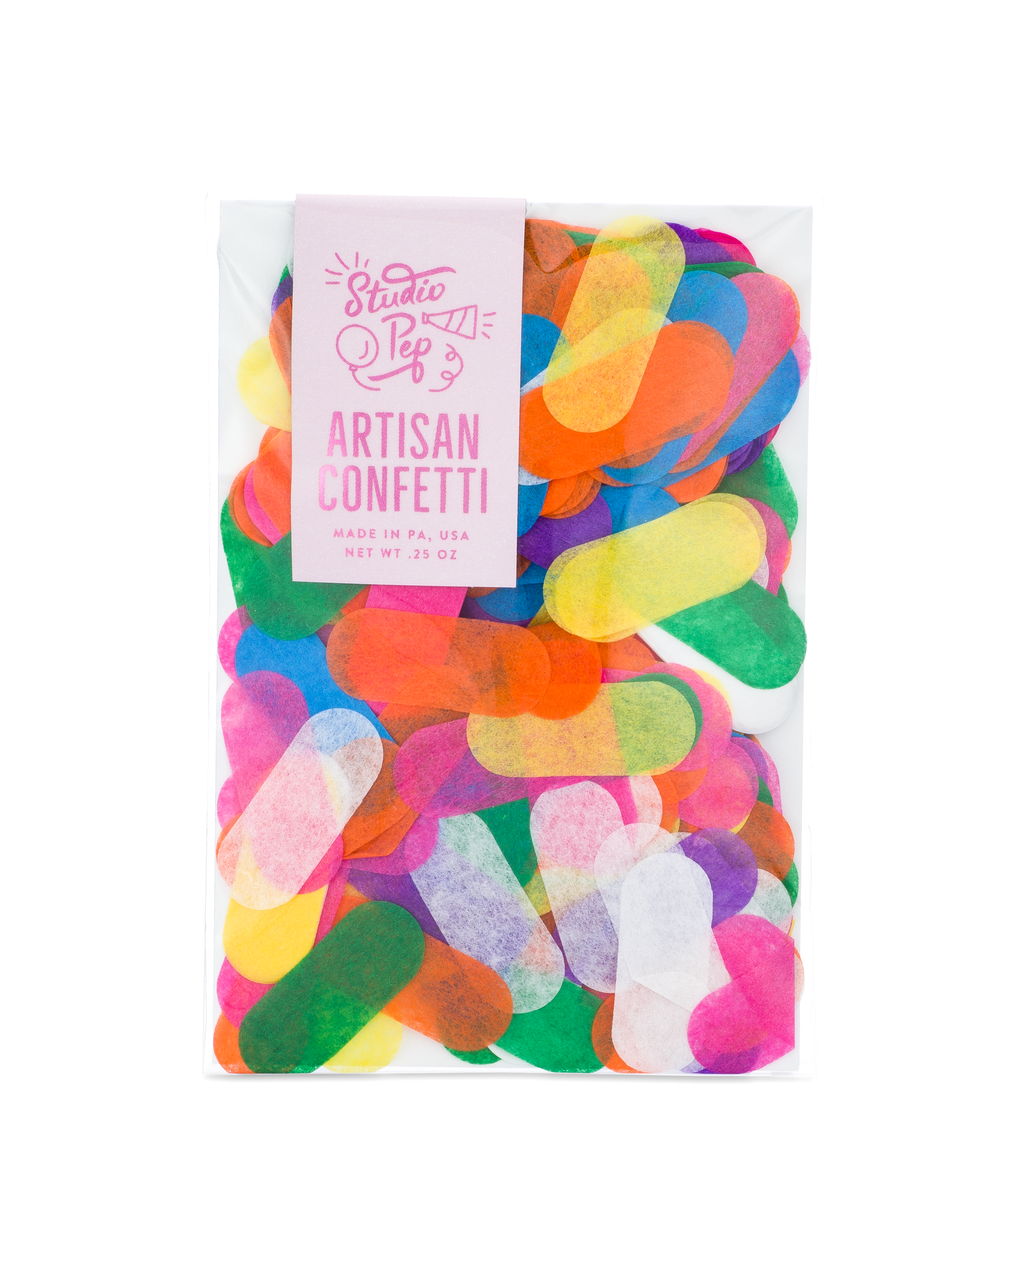 ICE CREAM SPRINKLES MUTLICOLOR CONFETTI MIX Studio Pep Confetti 1/4 OZ. BAG Bonjour Fete - Party Supplies